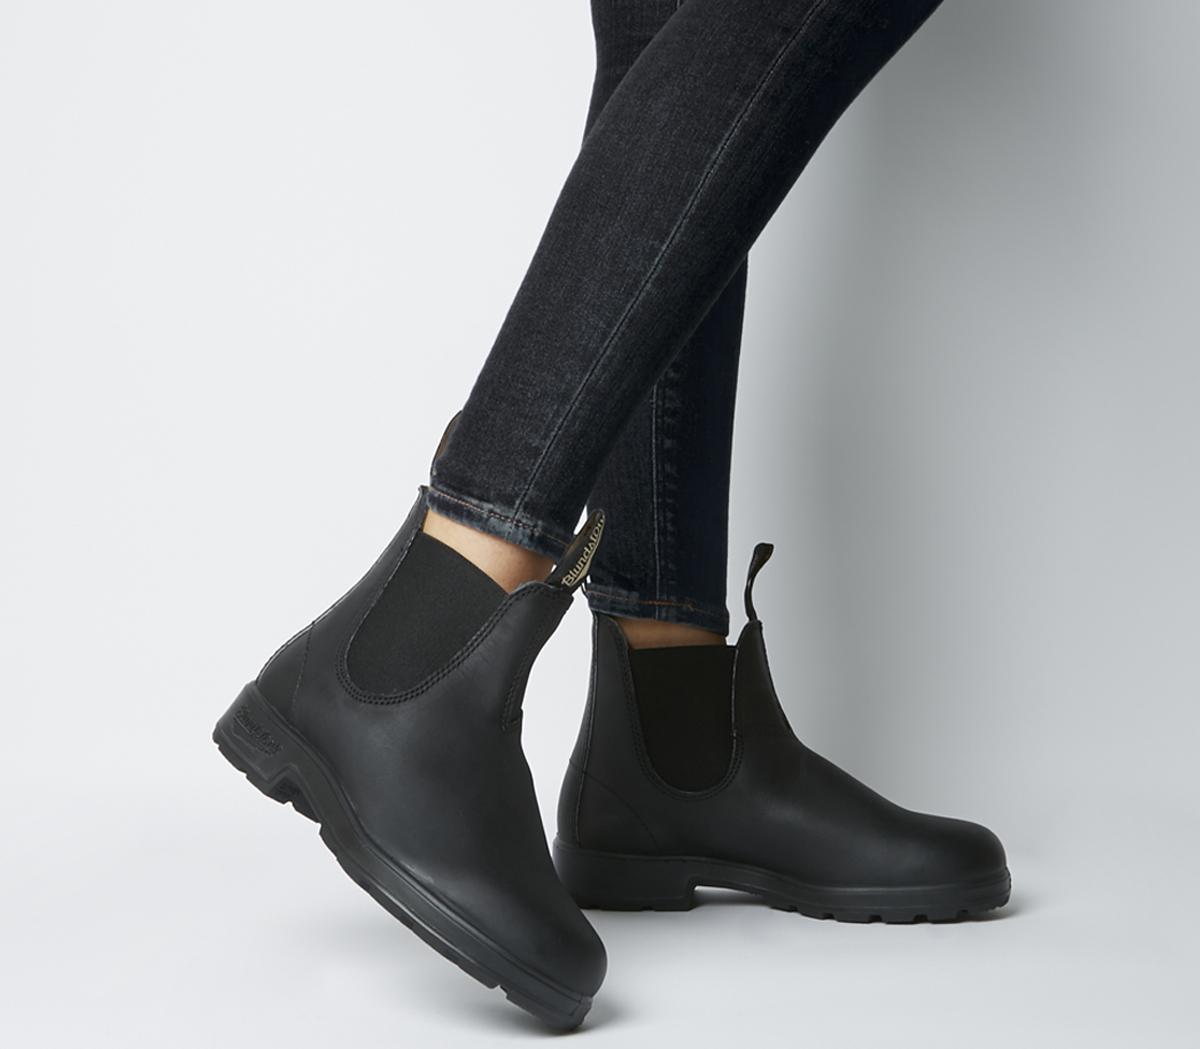 blundstone black boots